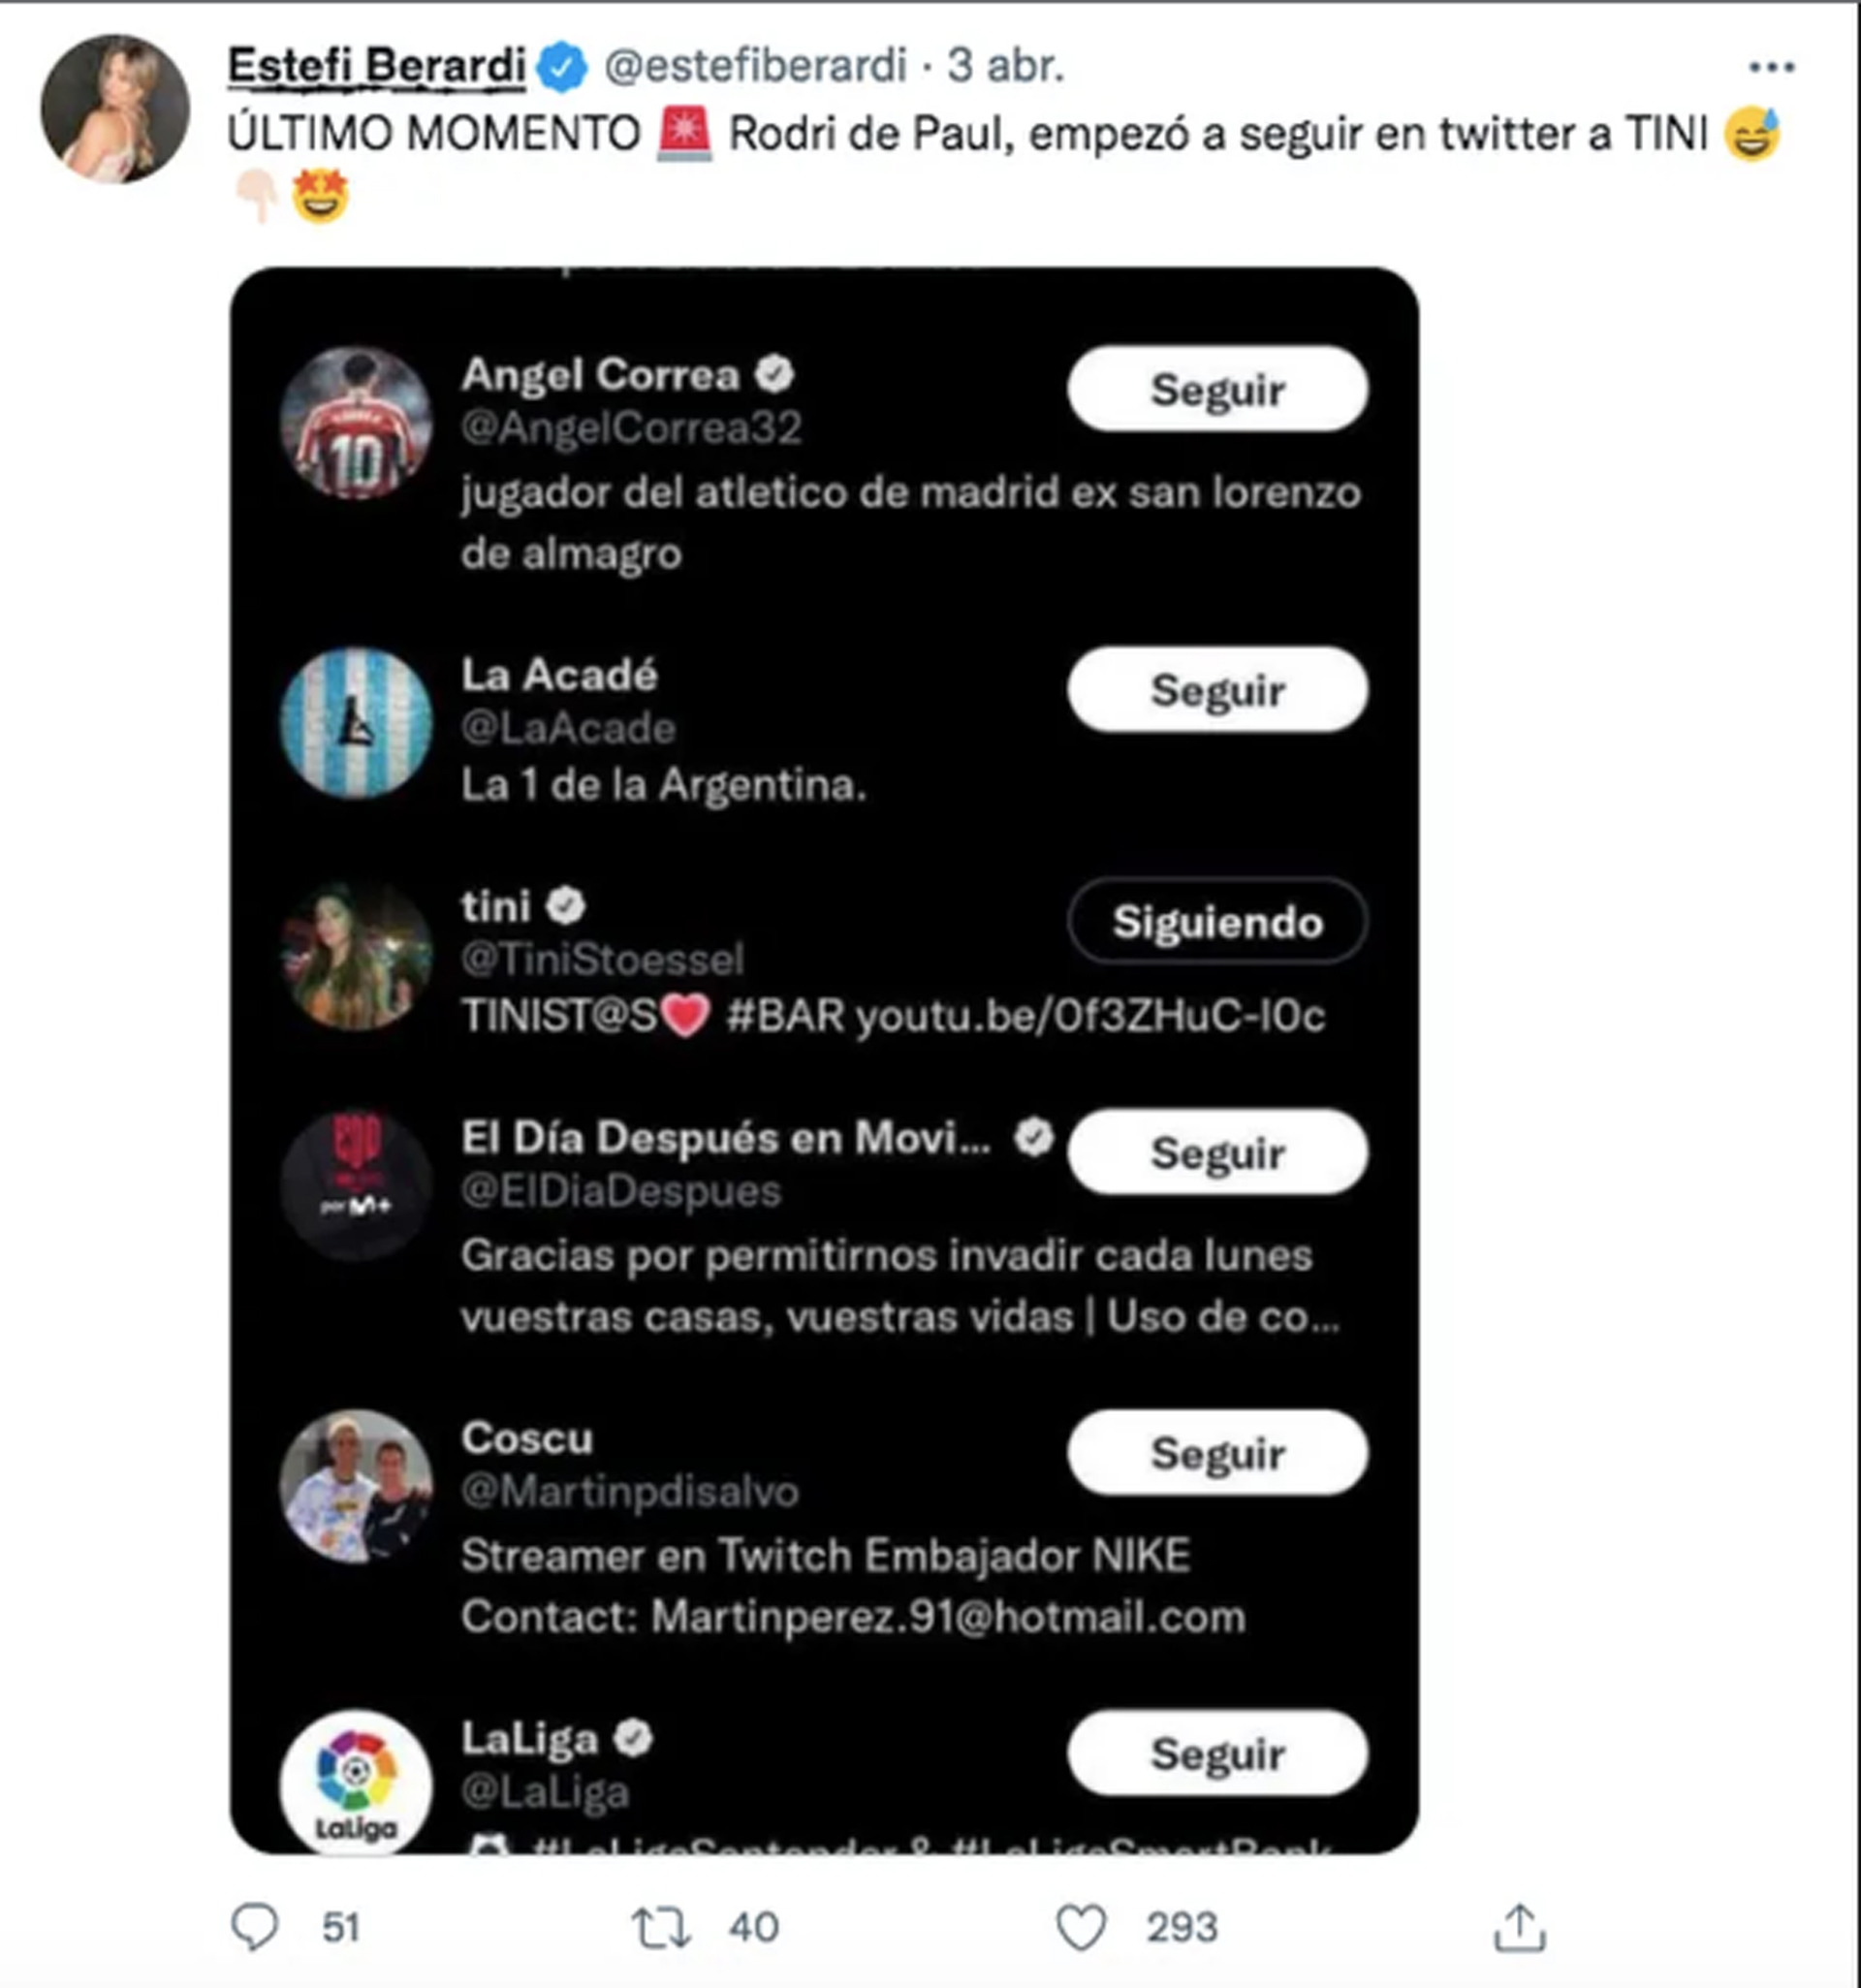 Rodrigo de Paul empezó a seguir a Tini Stoessel en Twitter